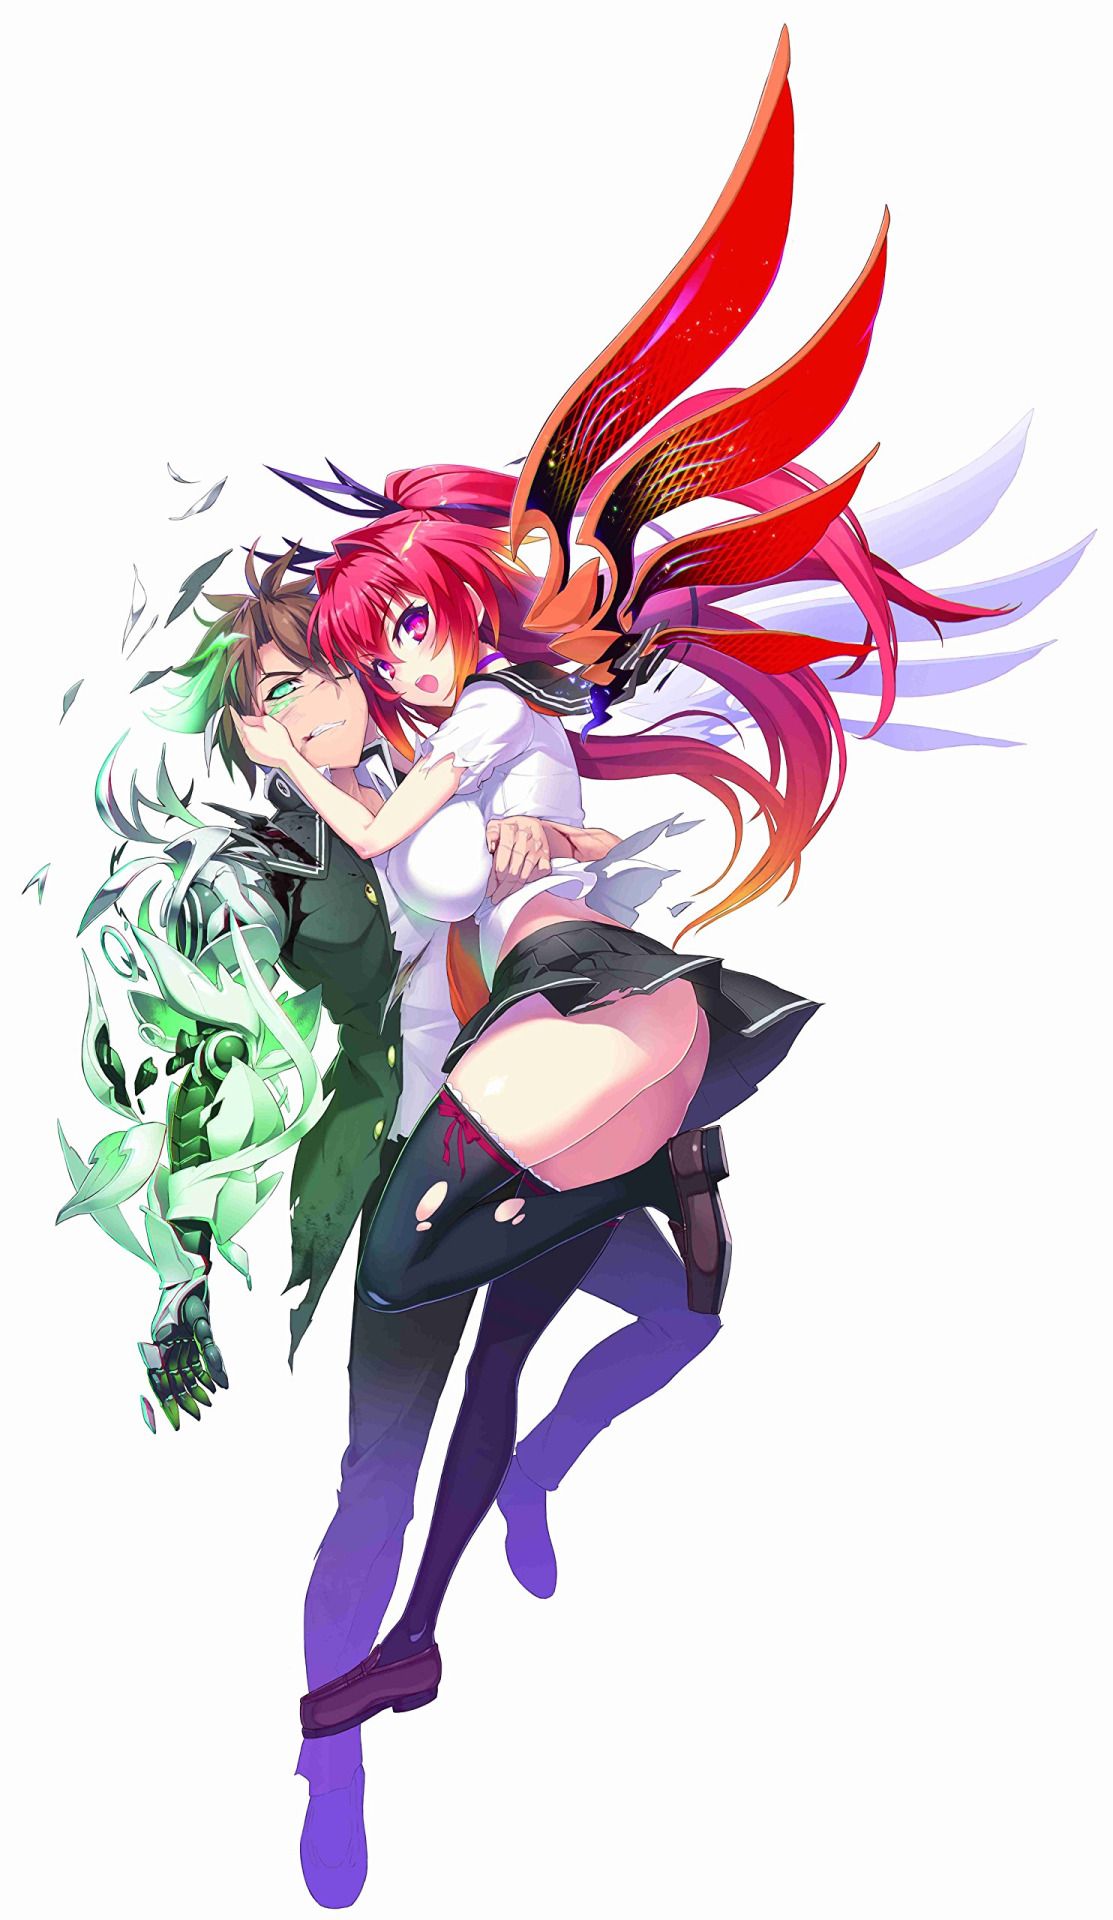 The Testament Of Sister New Devil Anime Manga Games